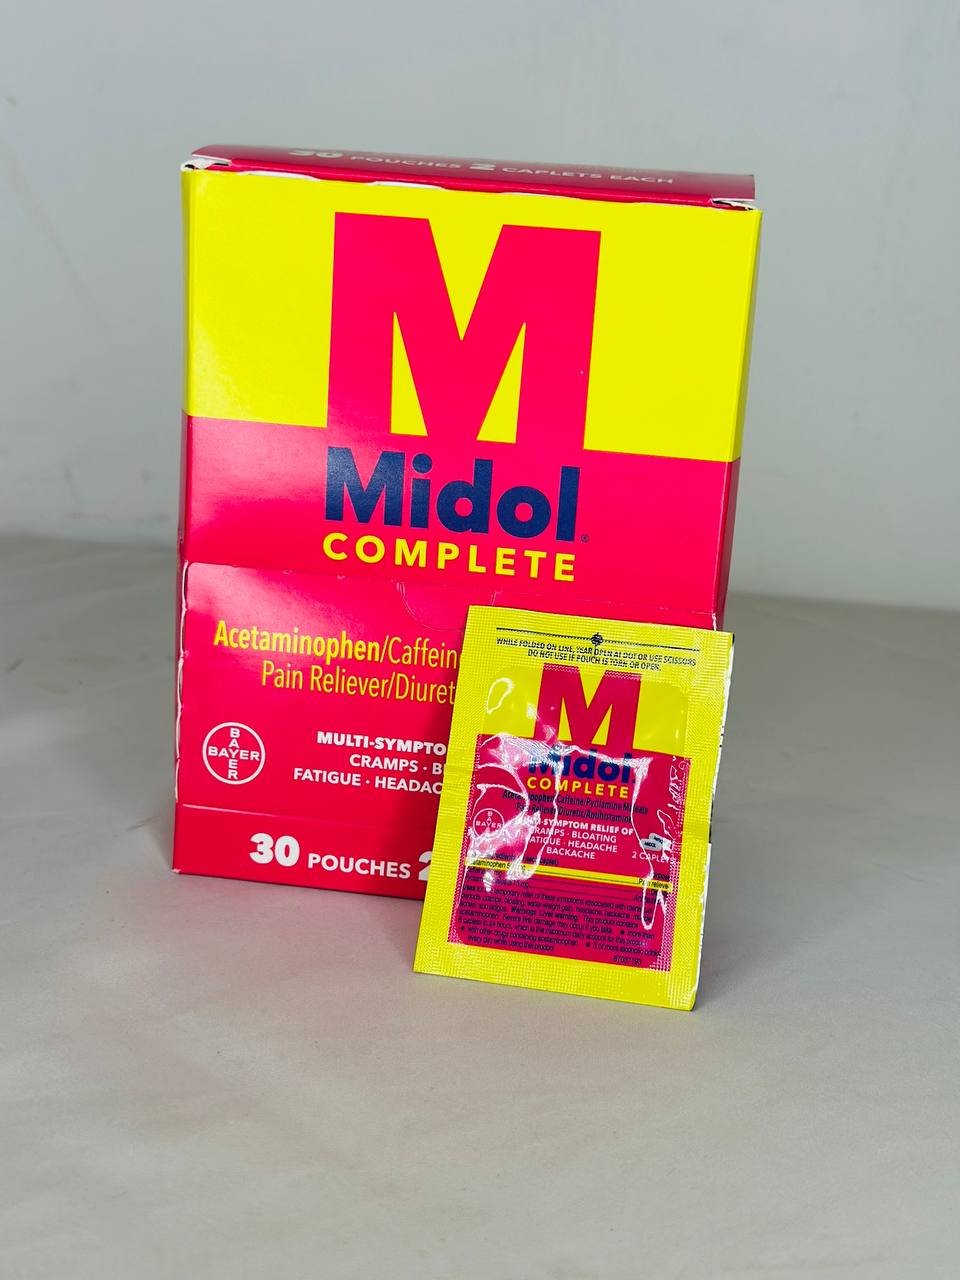 Midol complete